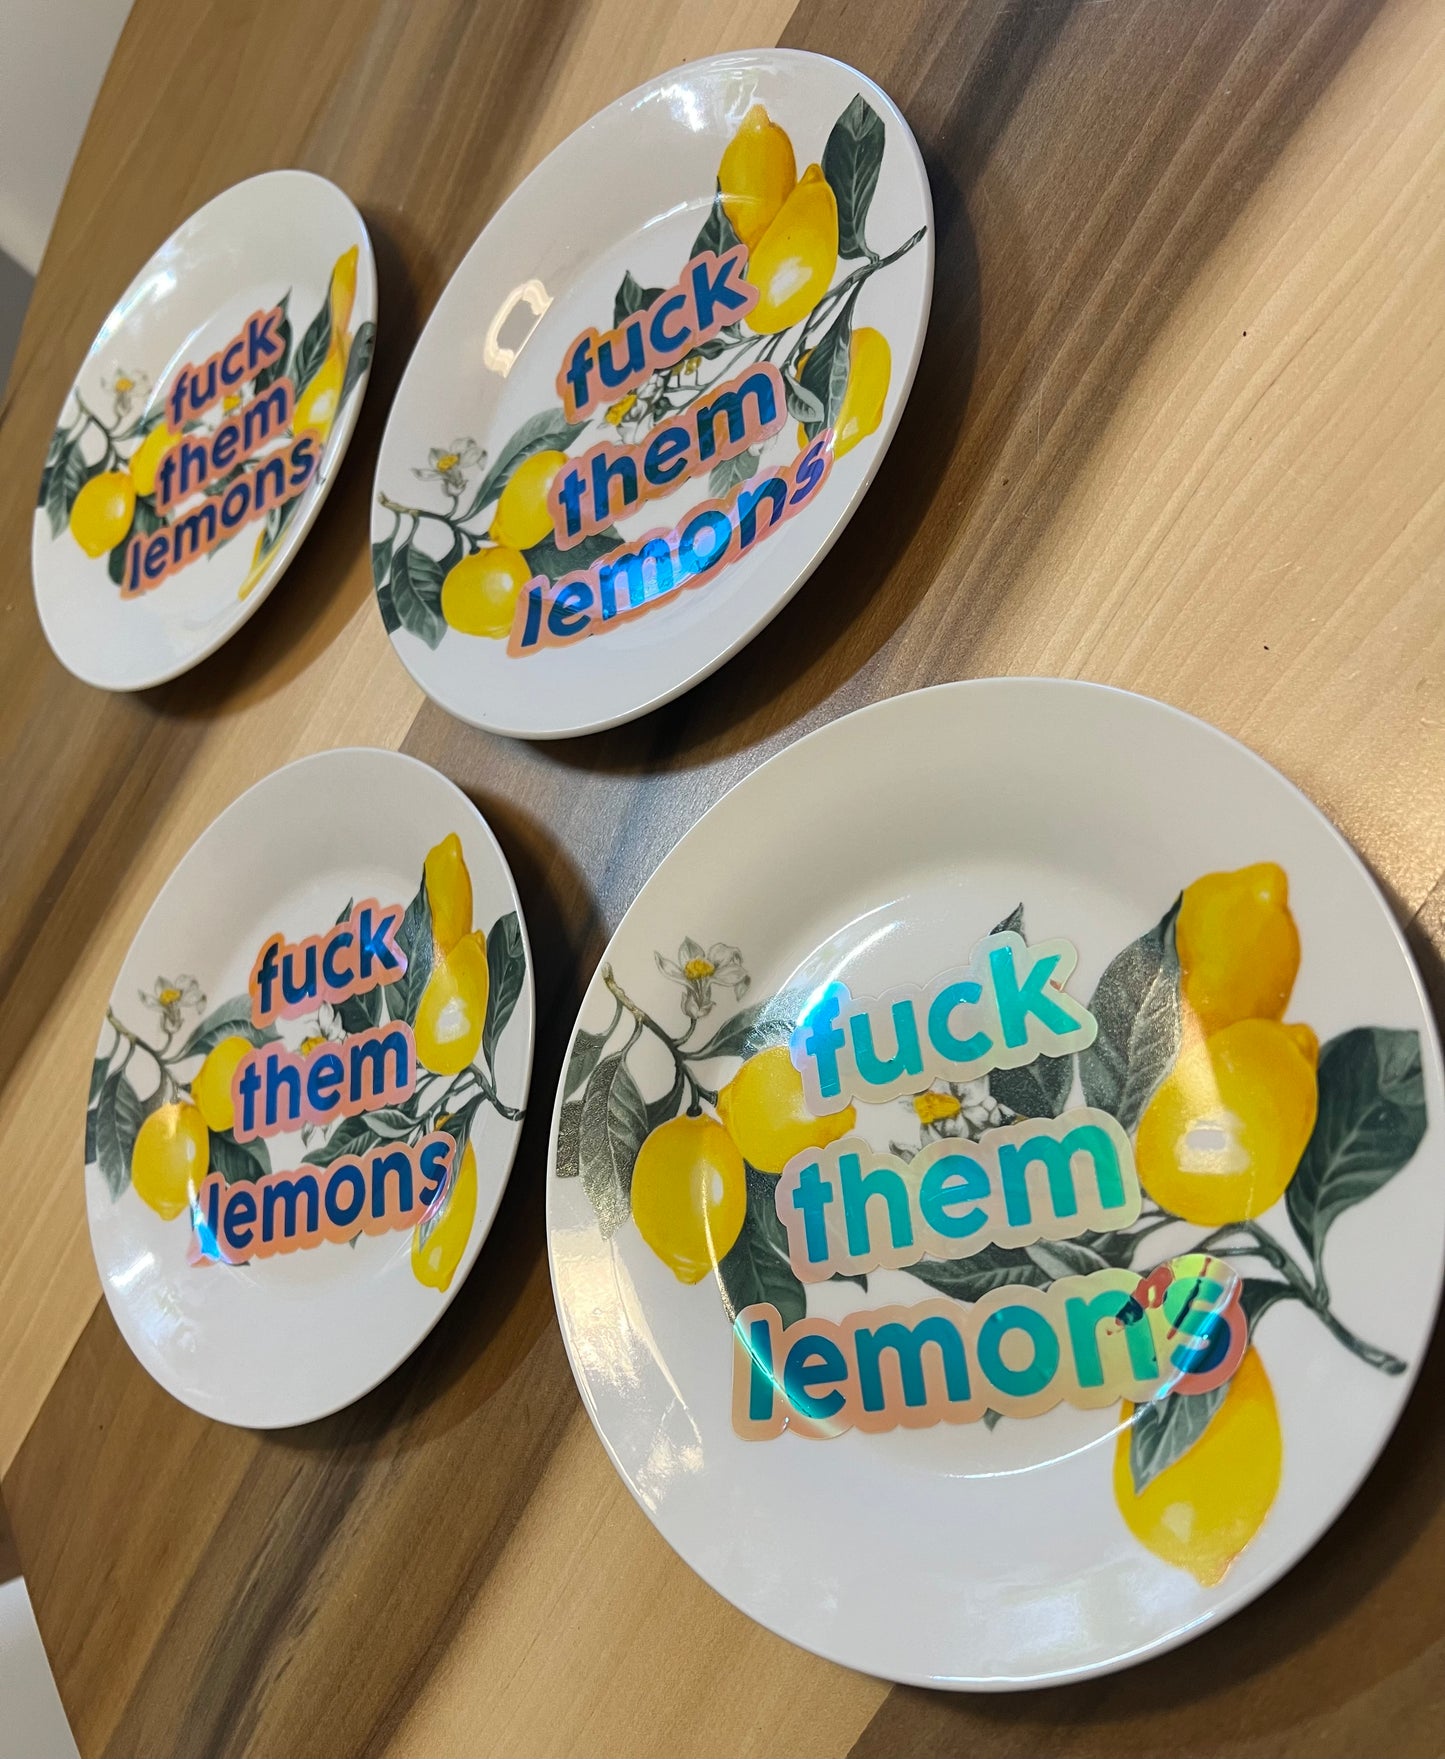 Fuck Them Lemons Decorative Plate